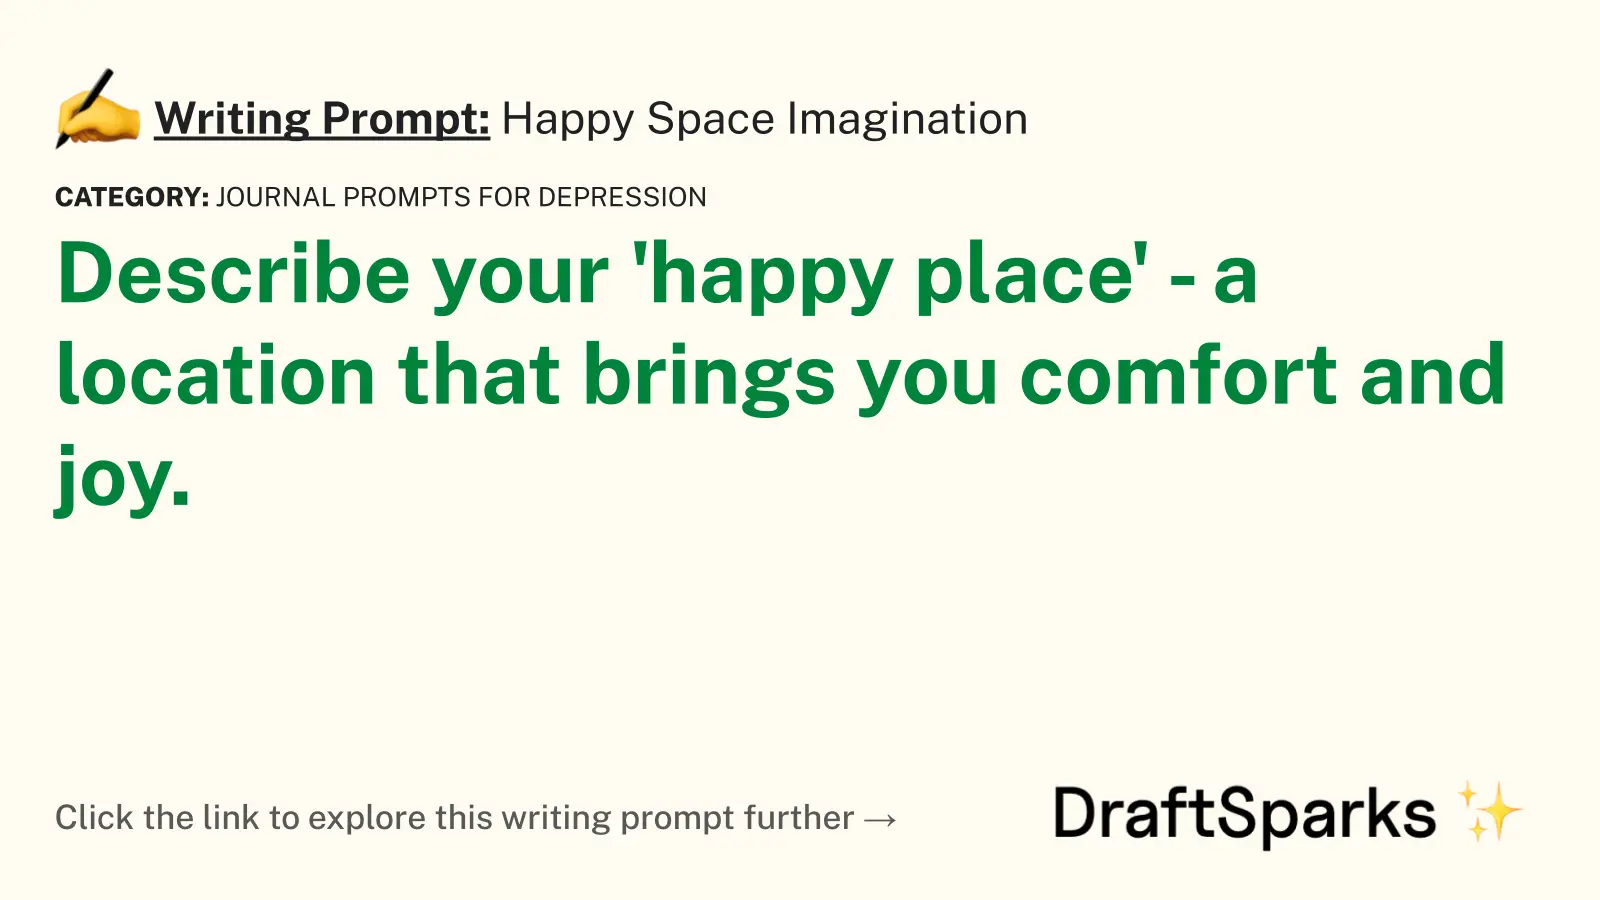 Happy Space Imagination